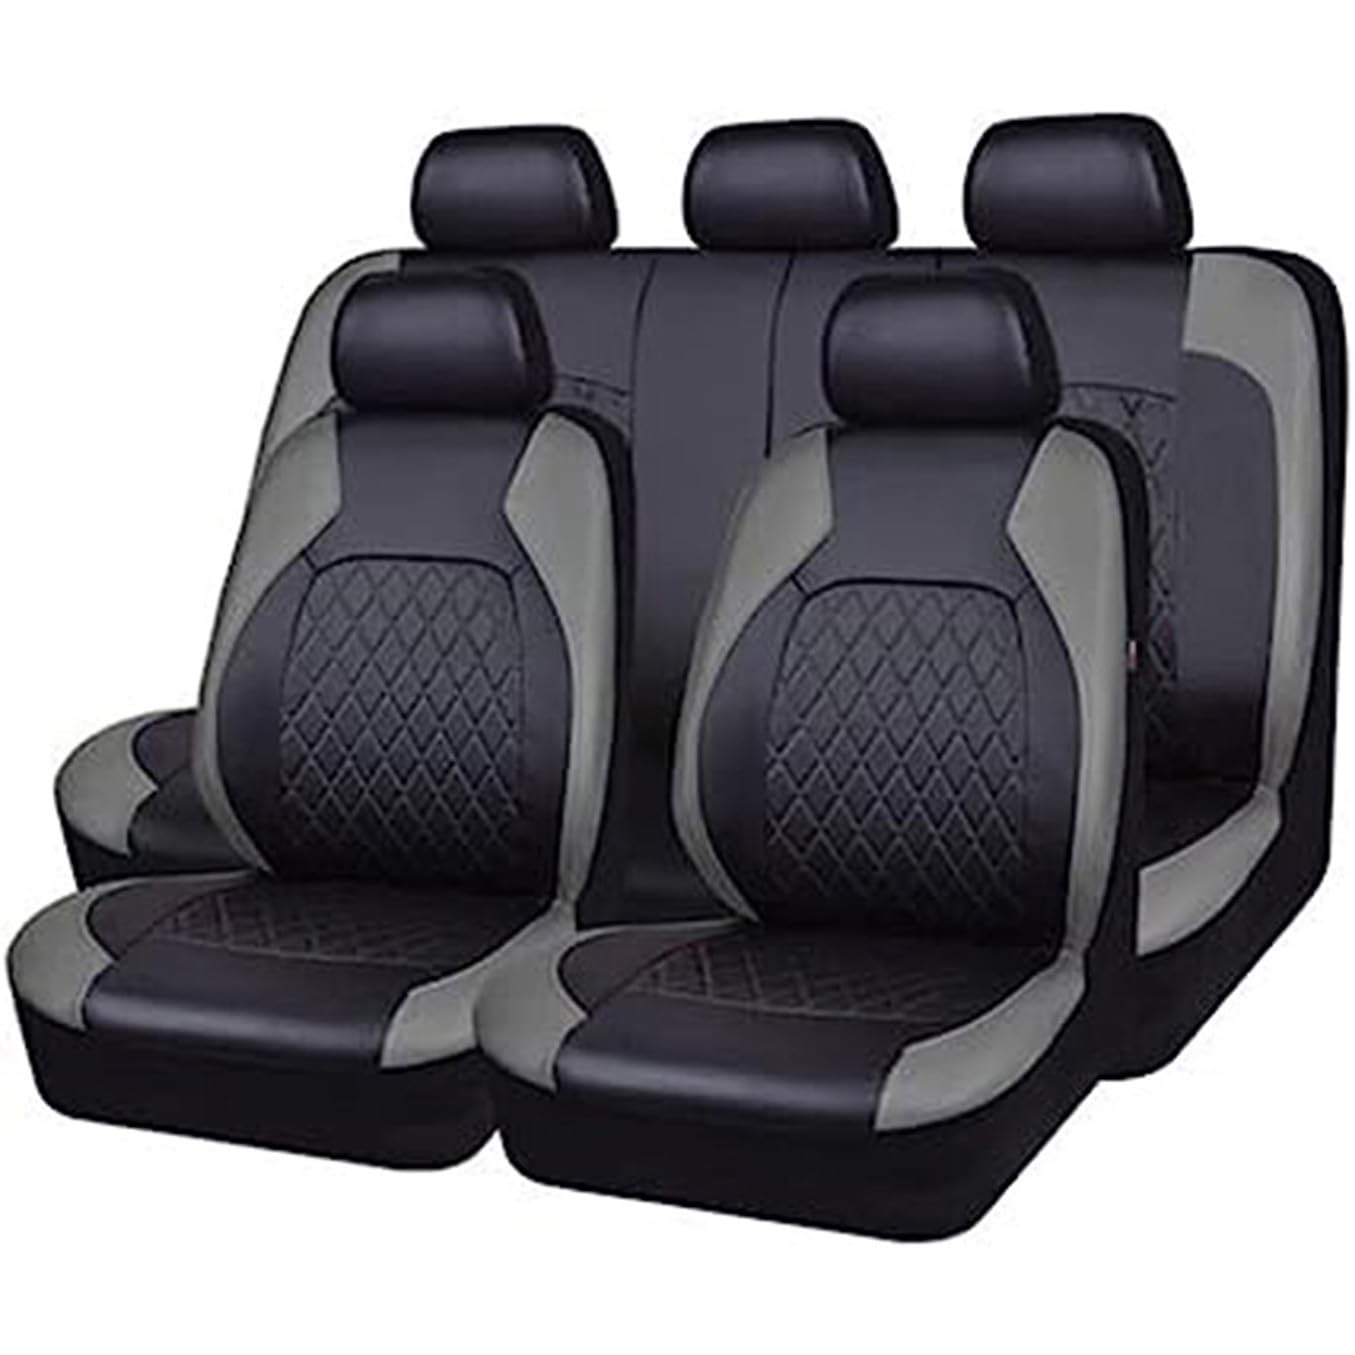 ENDYAK Auto-Sitzbezug für Mercedes Benz C Class Klasse Classe C Sedan W206 W205 W204 W203 W202 CL203 Sedan, 9-teiliges Set Sitzbezug Komplett-Set, wasserdichte Autositzschoner aus Leder,Grey von ENDYAK